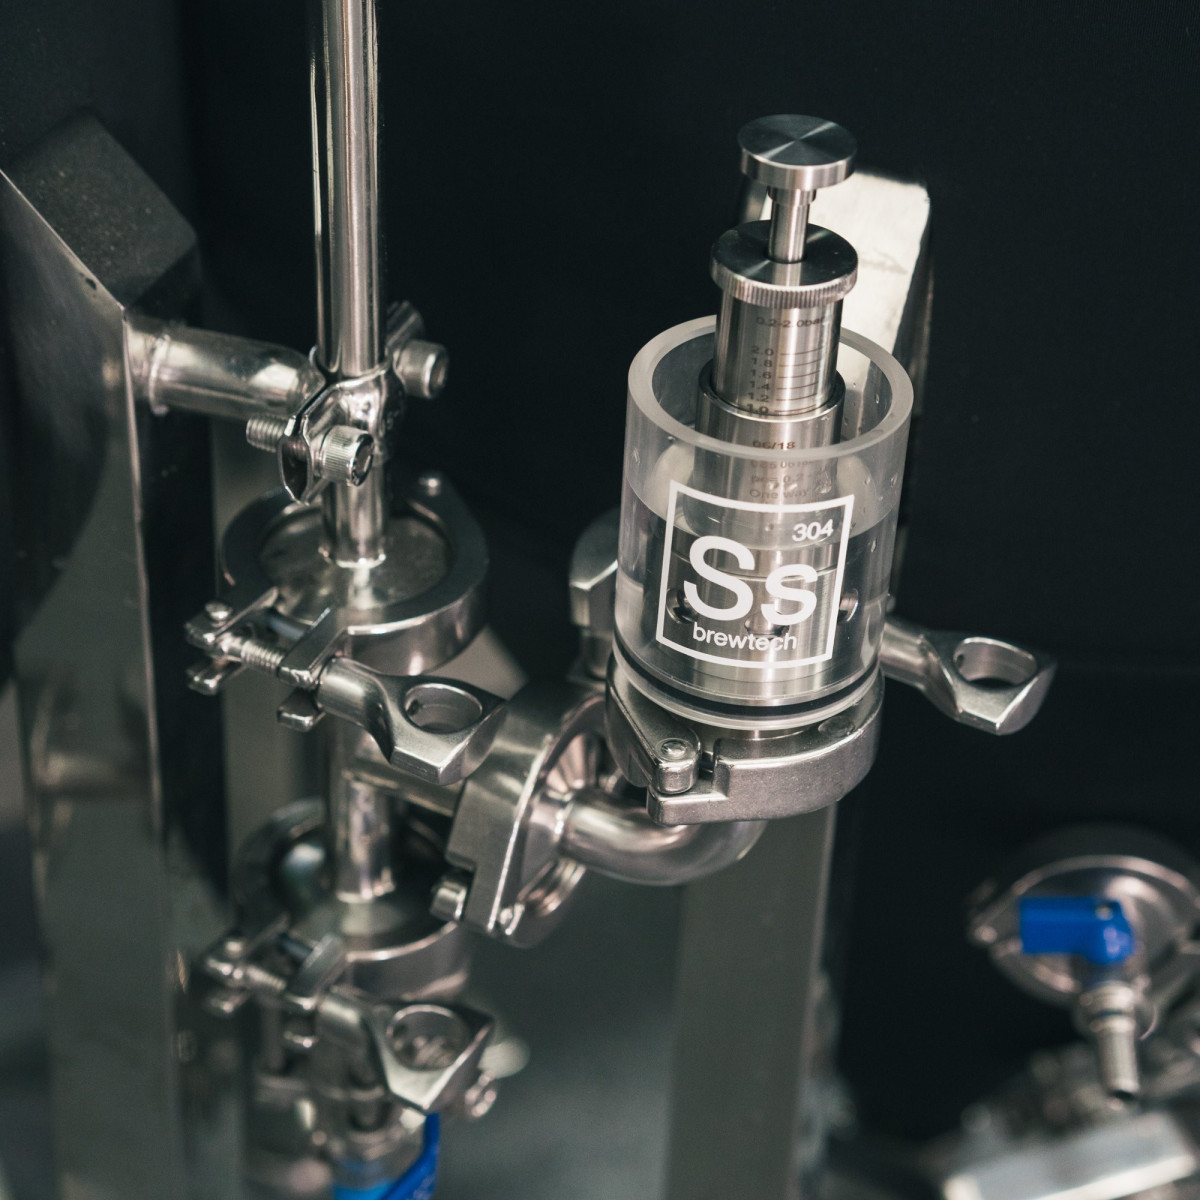 Ss Brewtech™ Sspunding valve adjustable pressure relief valve - 1.5" TC (with scale)